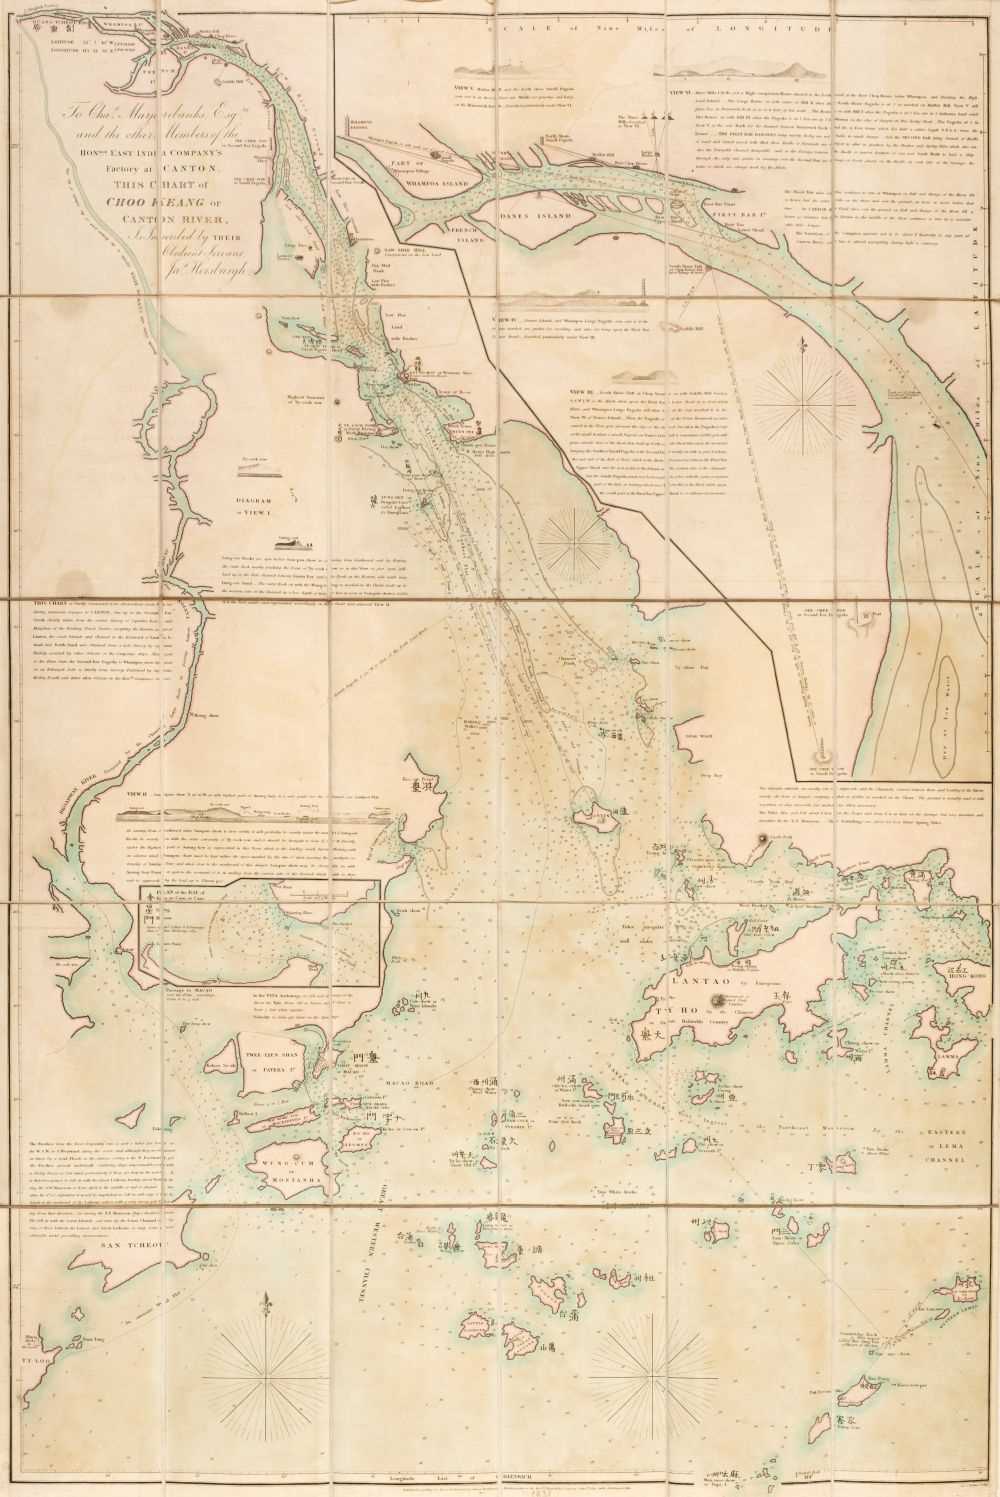 185 - Pearl River. Horsburgh (James)..., Chart of Choo Keang or Canton River..., 1841